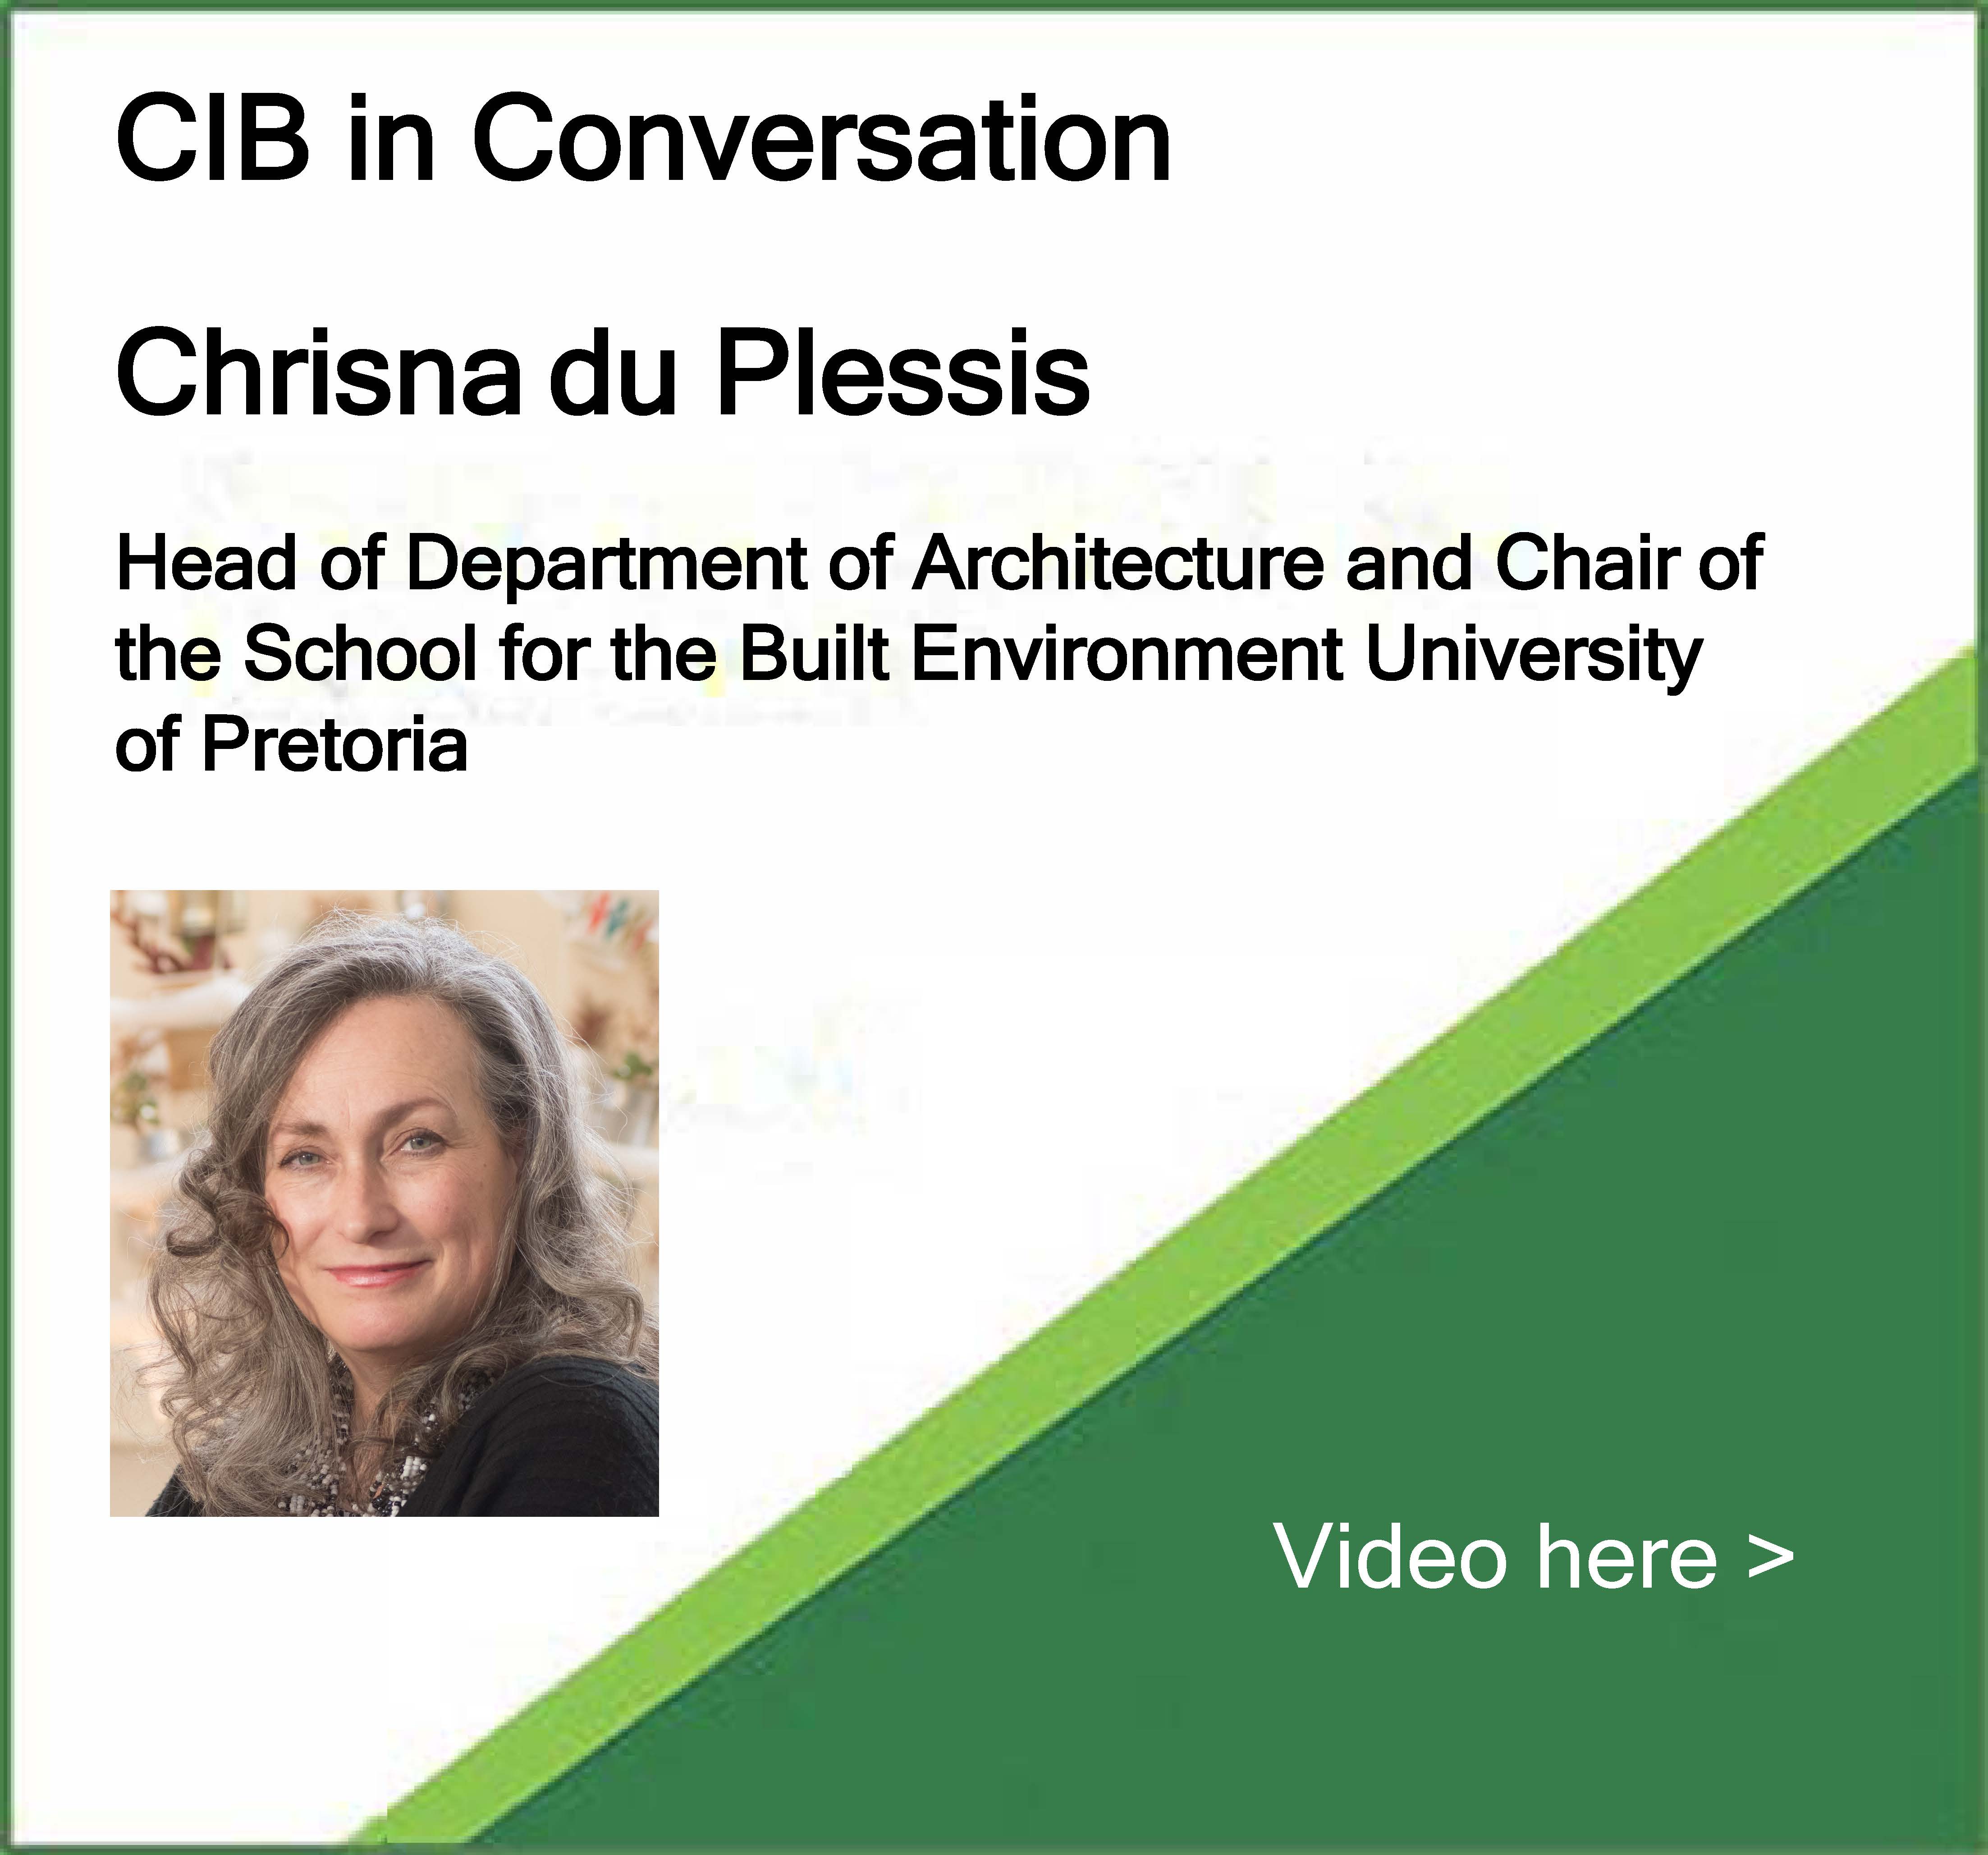 CIB in Conversation Chrisna du Plessis